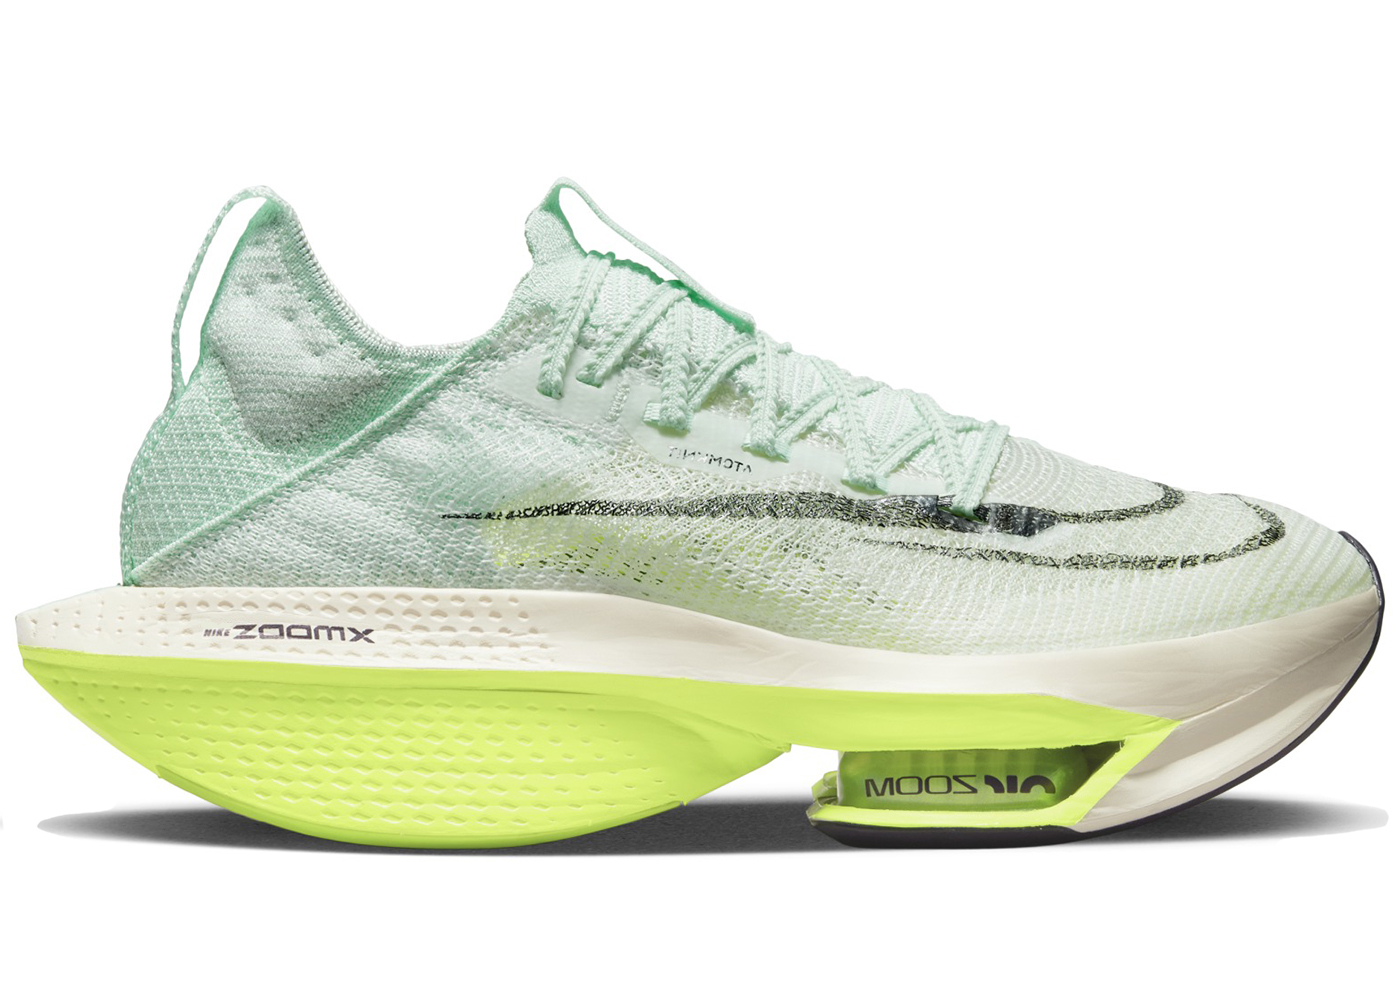 Nike Air Zoom Alphafly Next% 2 Mint Foam Barely Green (Women's)